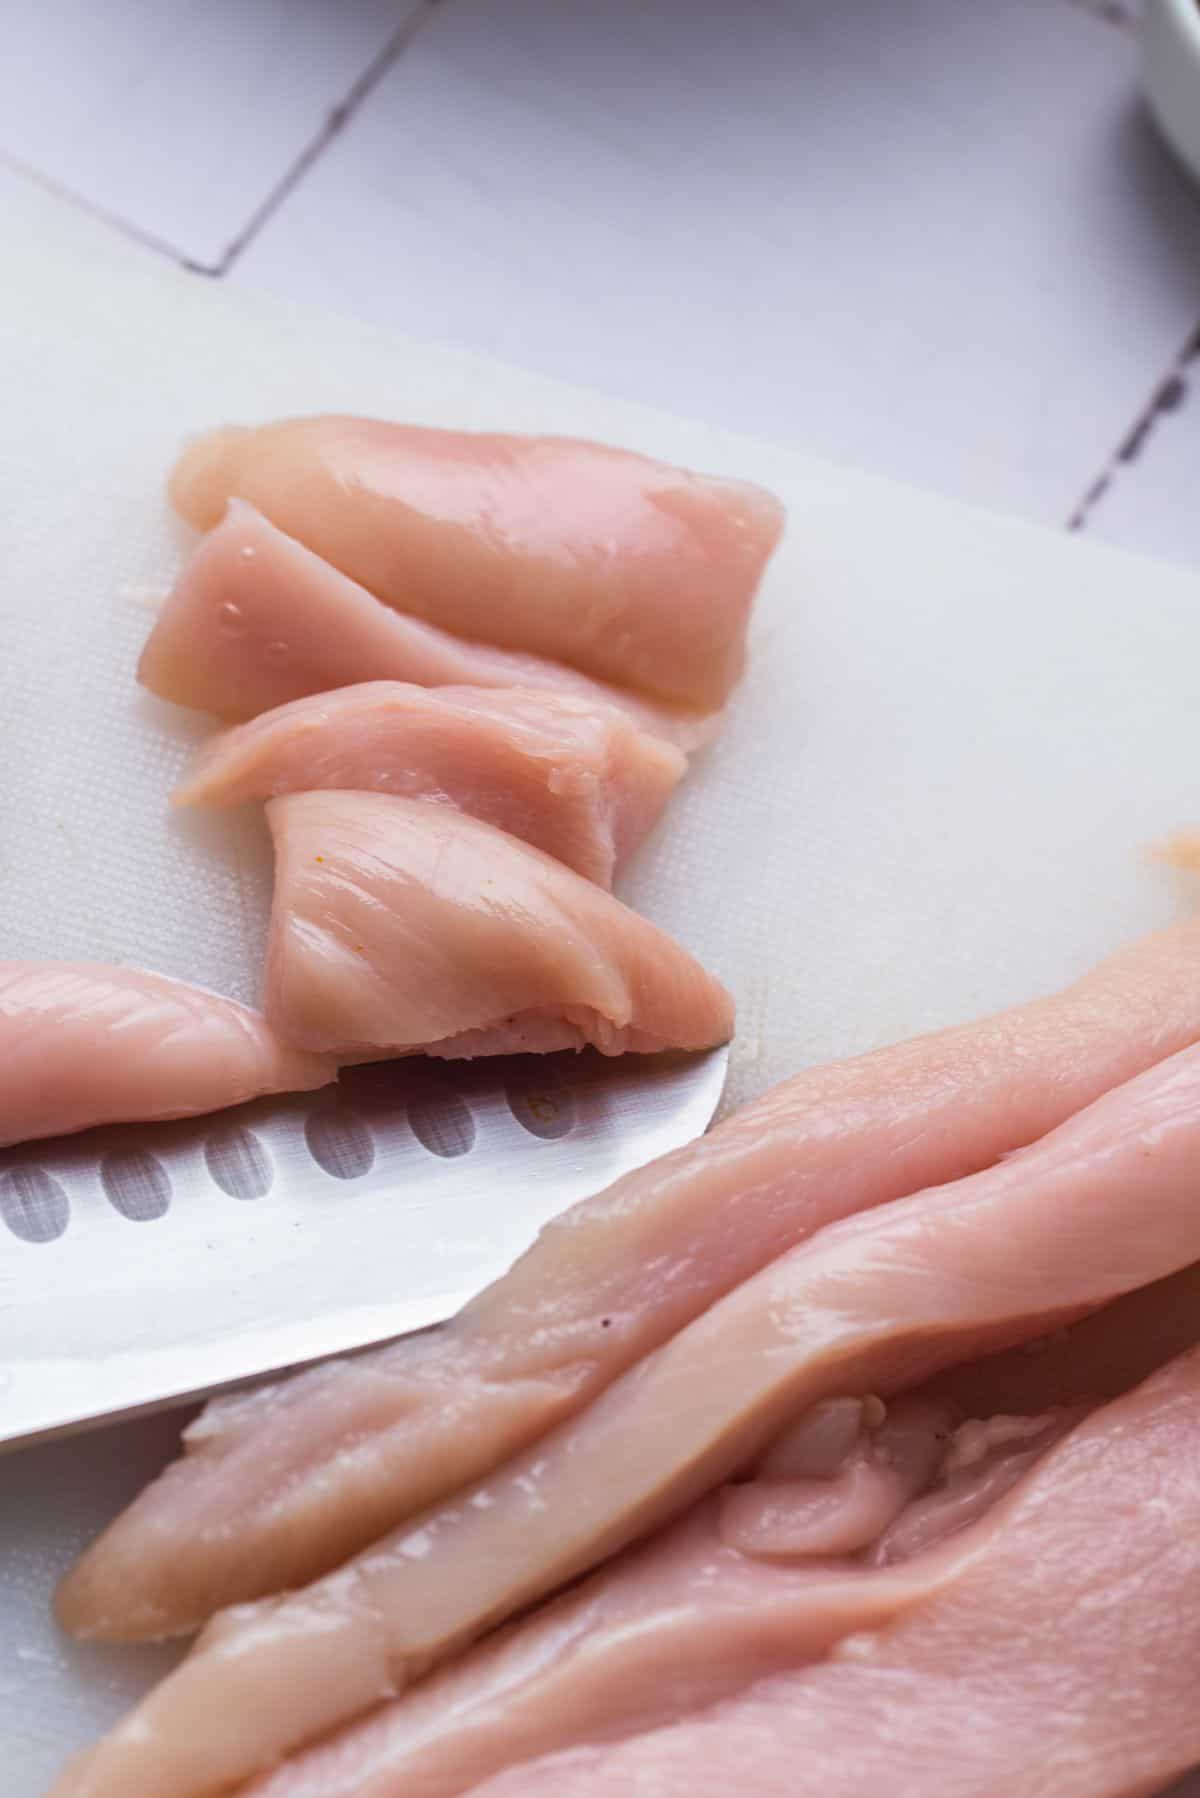 raw chicken breasts cut into pieces